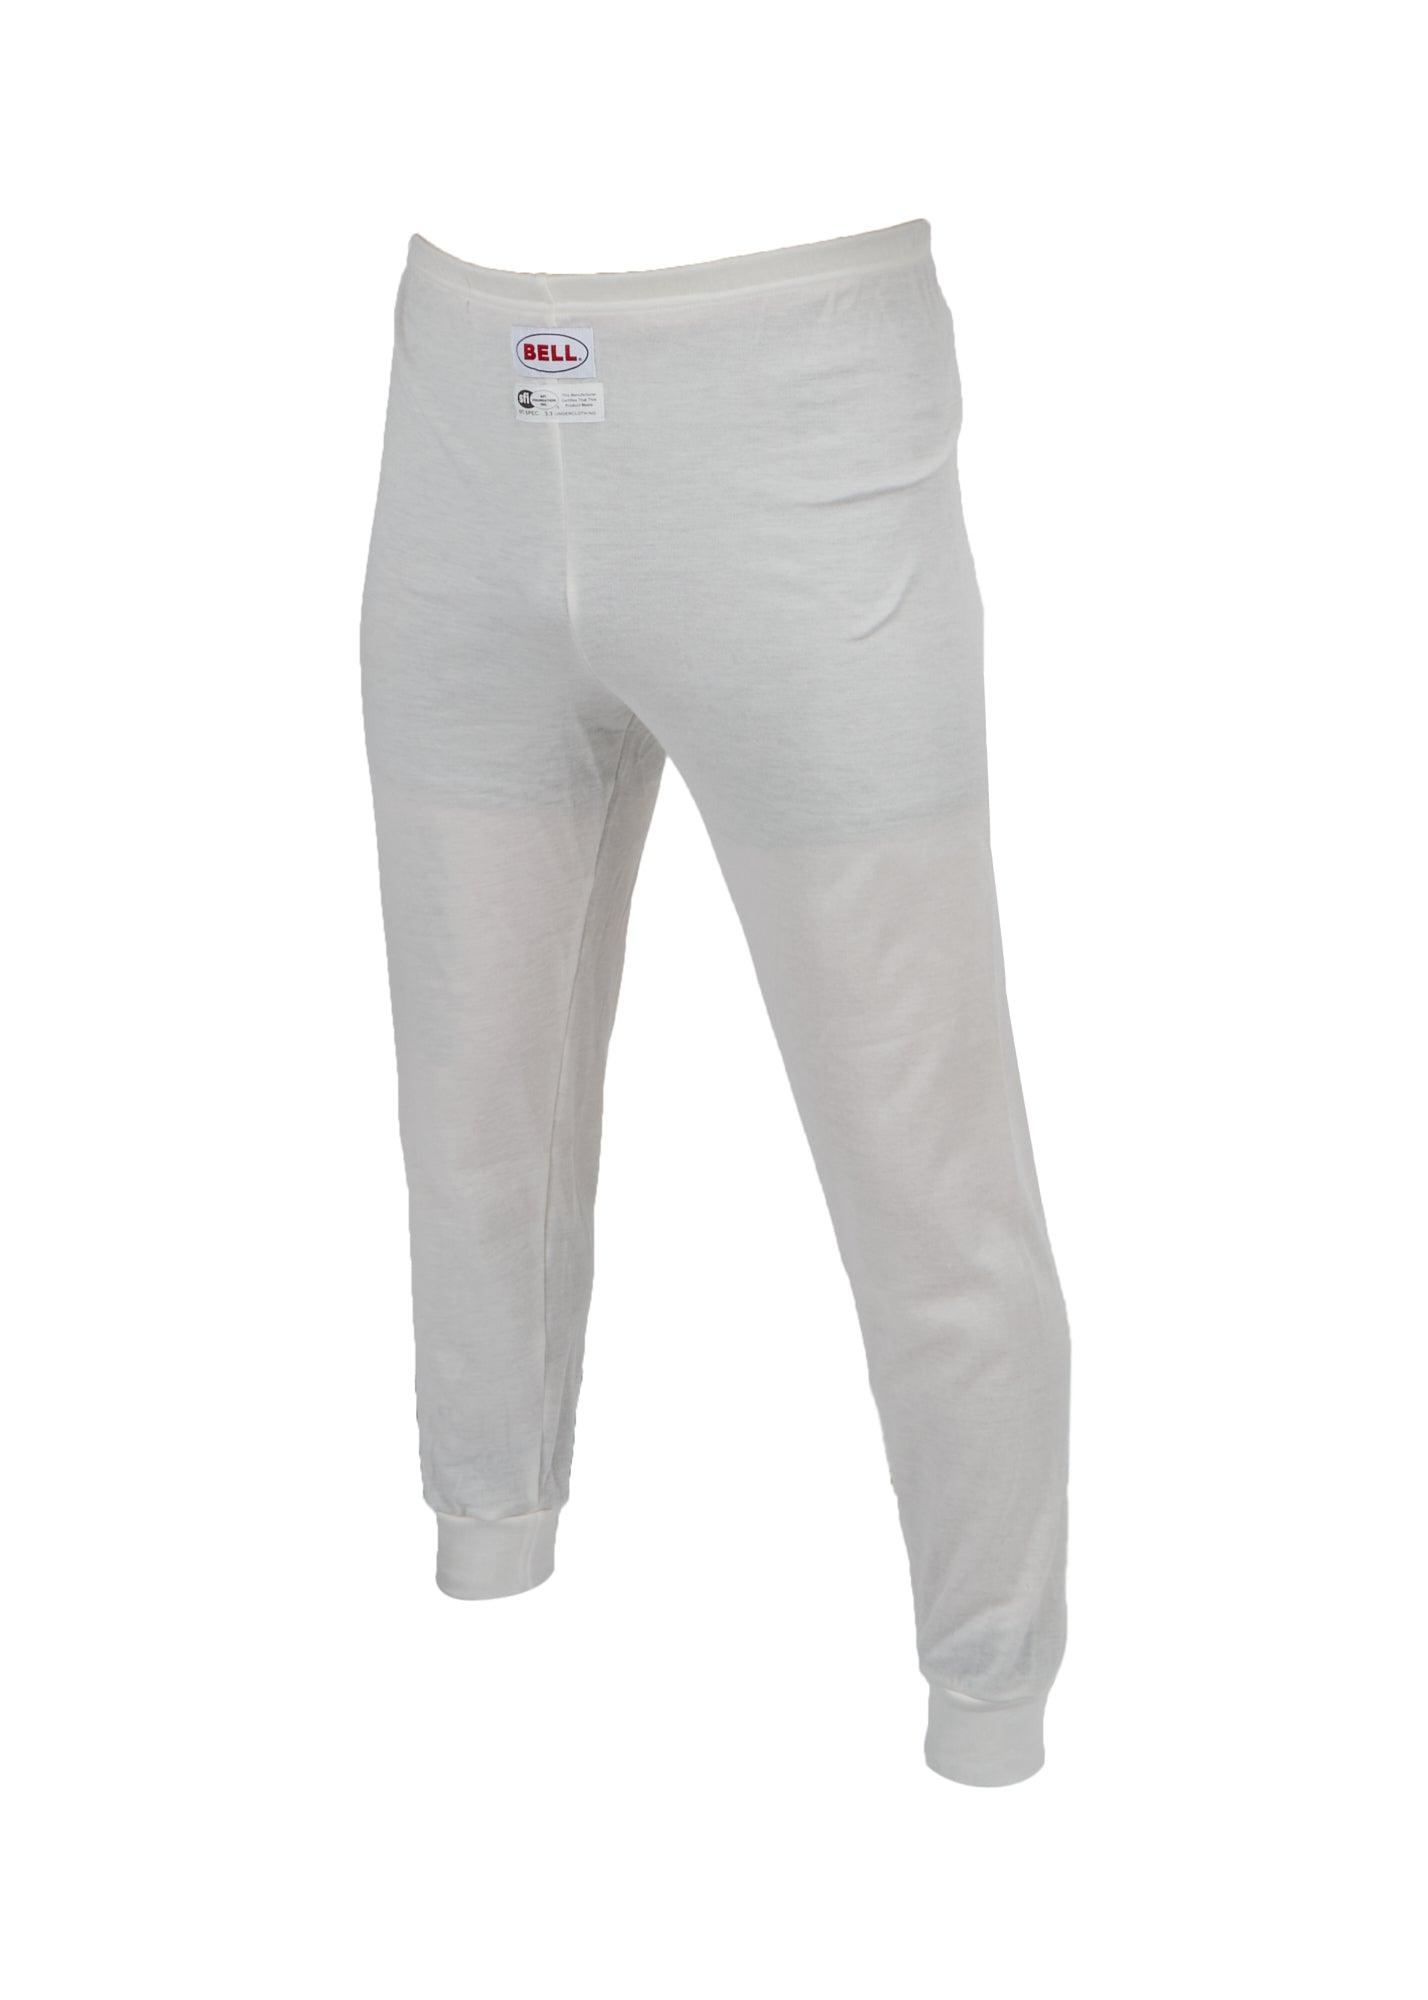 Underwear Bottom SPORT- TX White 2X SFI 3.3/5 - Burlile Performance Products